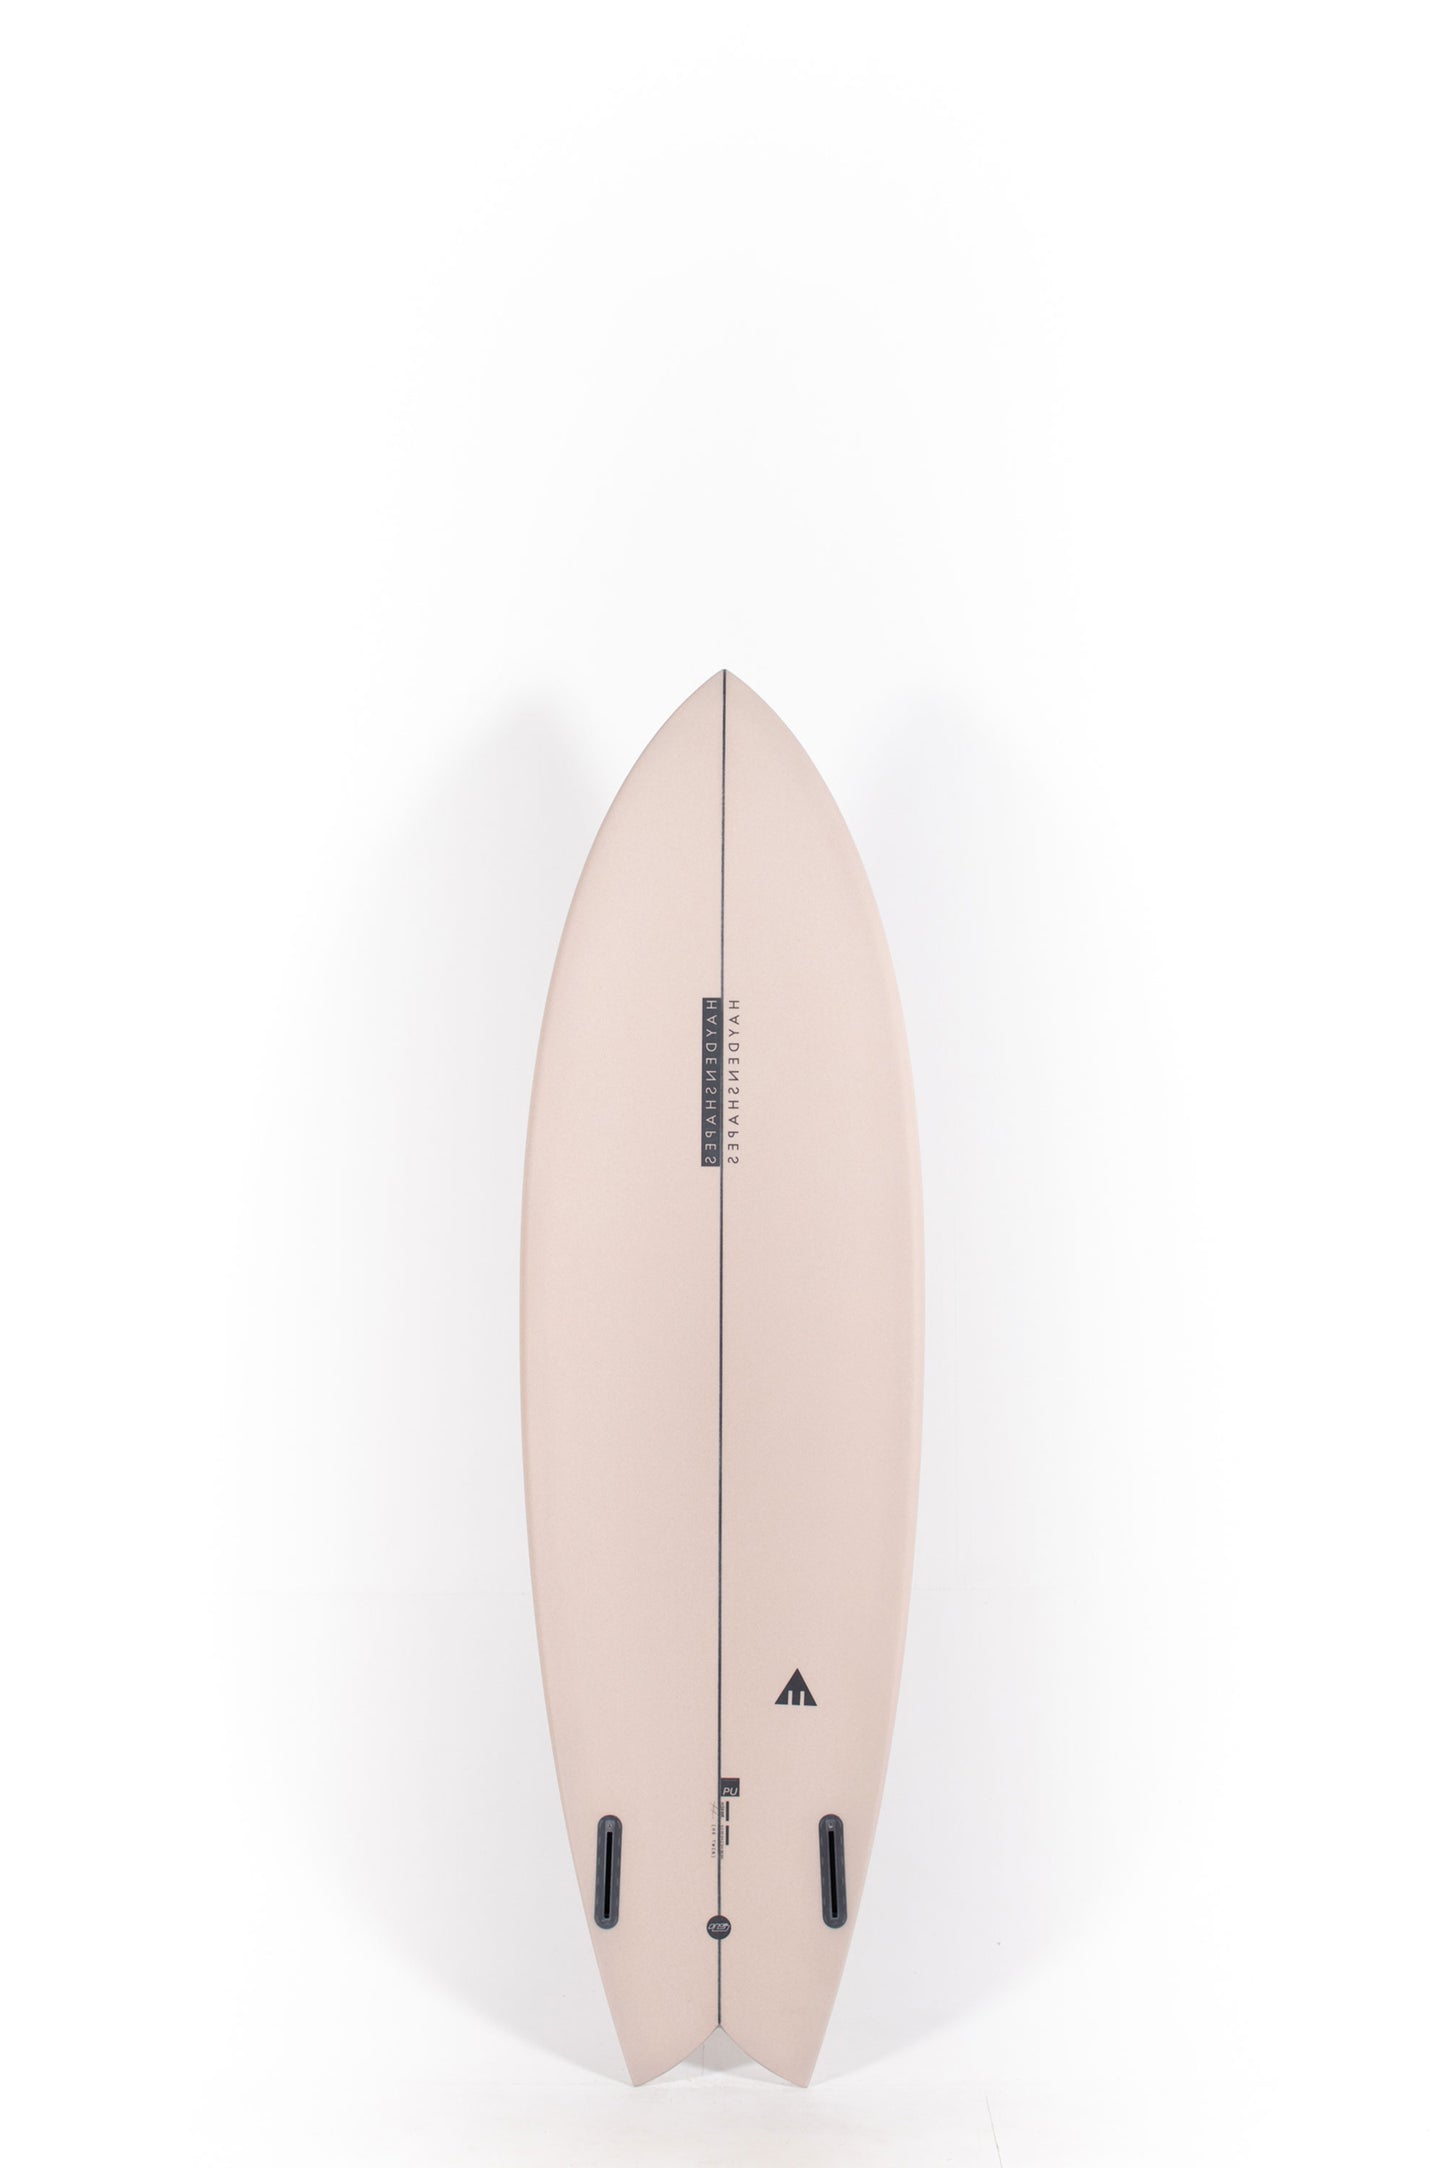 Pukas Surf Shop - HaydenShapes Surfboard - HYPTO KRYPTO TWIN PU - 6'2" X 20 3/4" X 2 3/4" - 38.55L